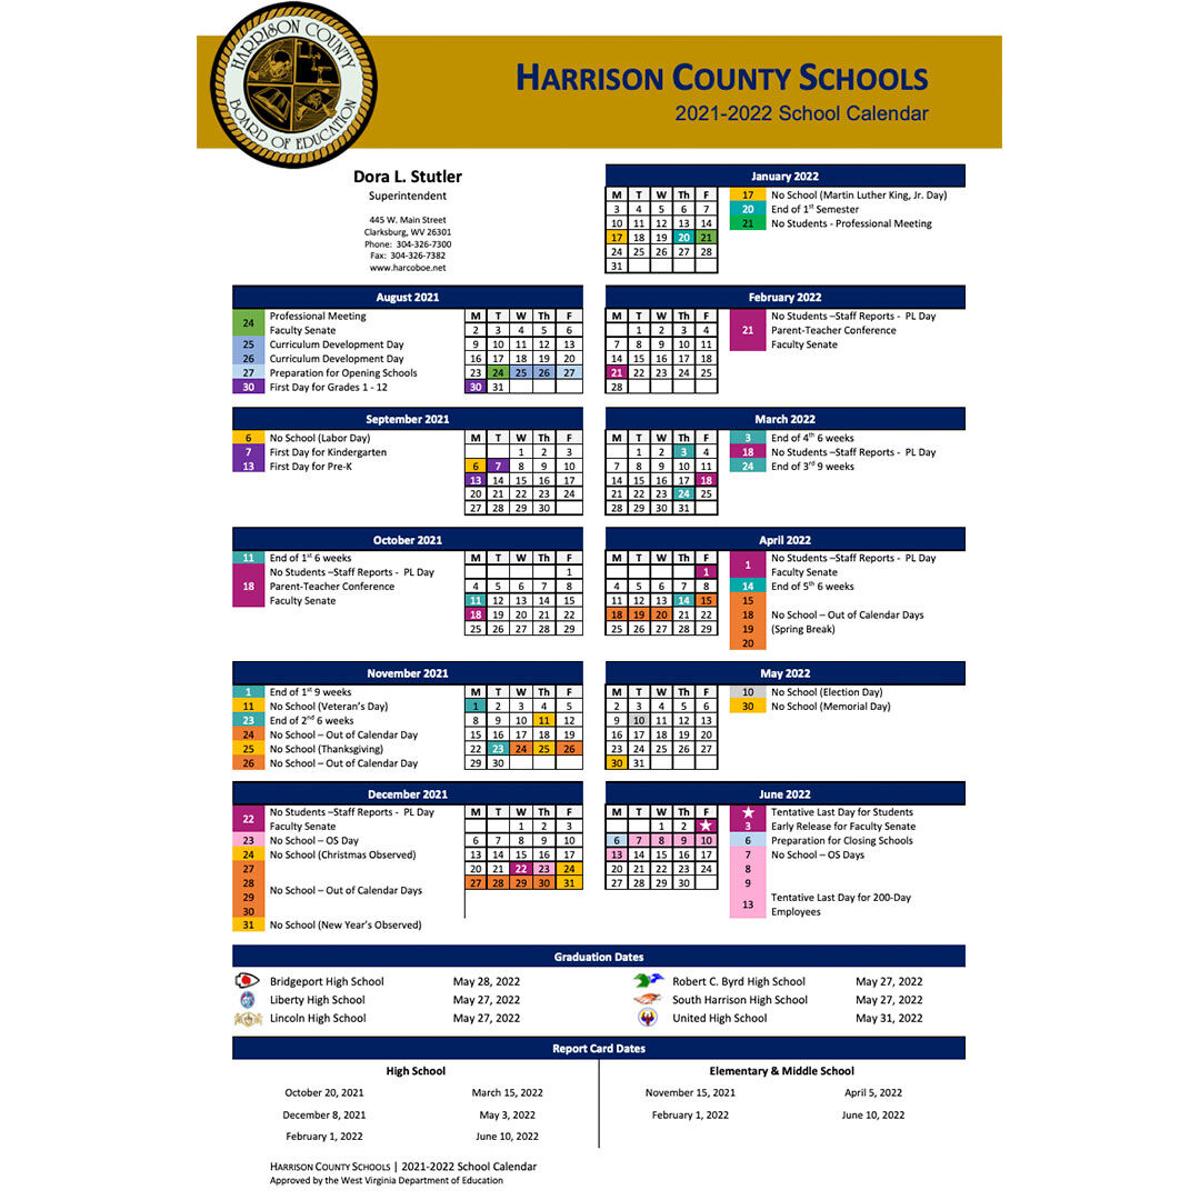 Oregon State Academic Calendar 2022 2023 Harrison County Schools Academic Calendar 2021-22 | Wv News | Wvnews.com